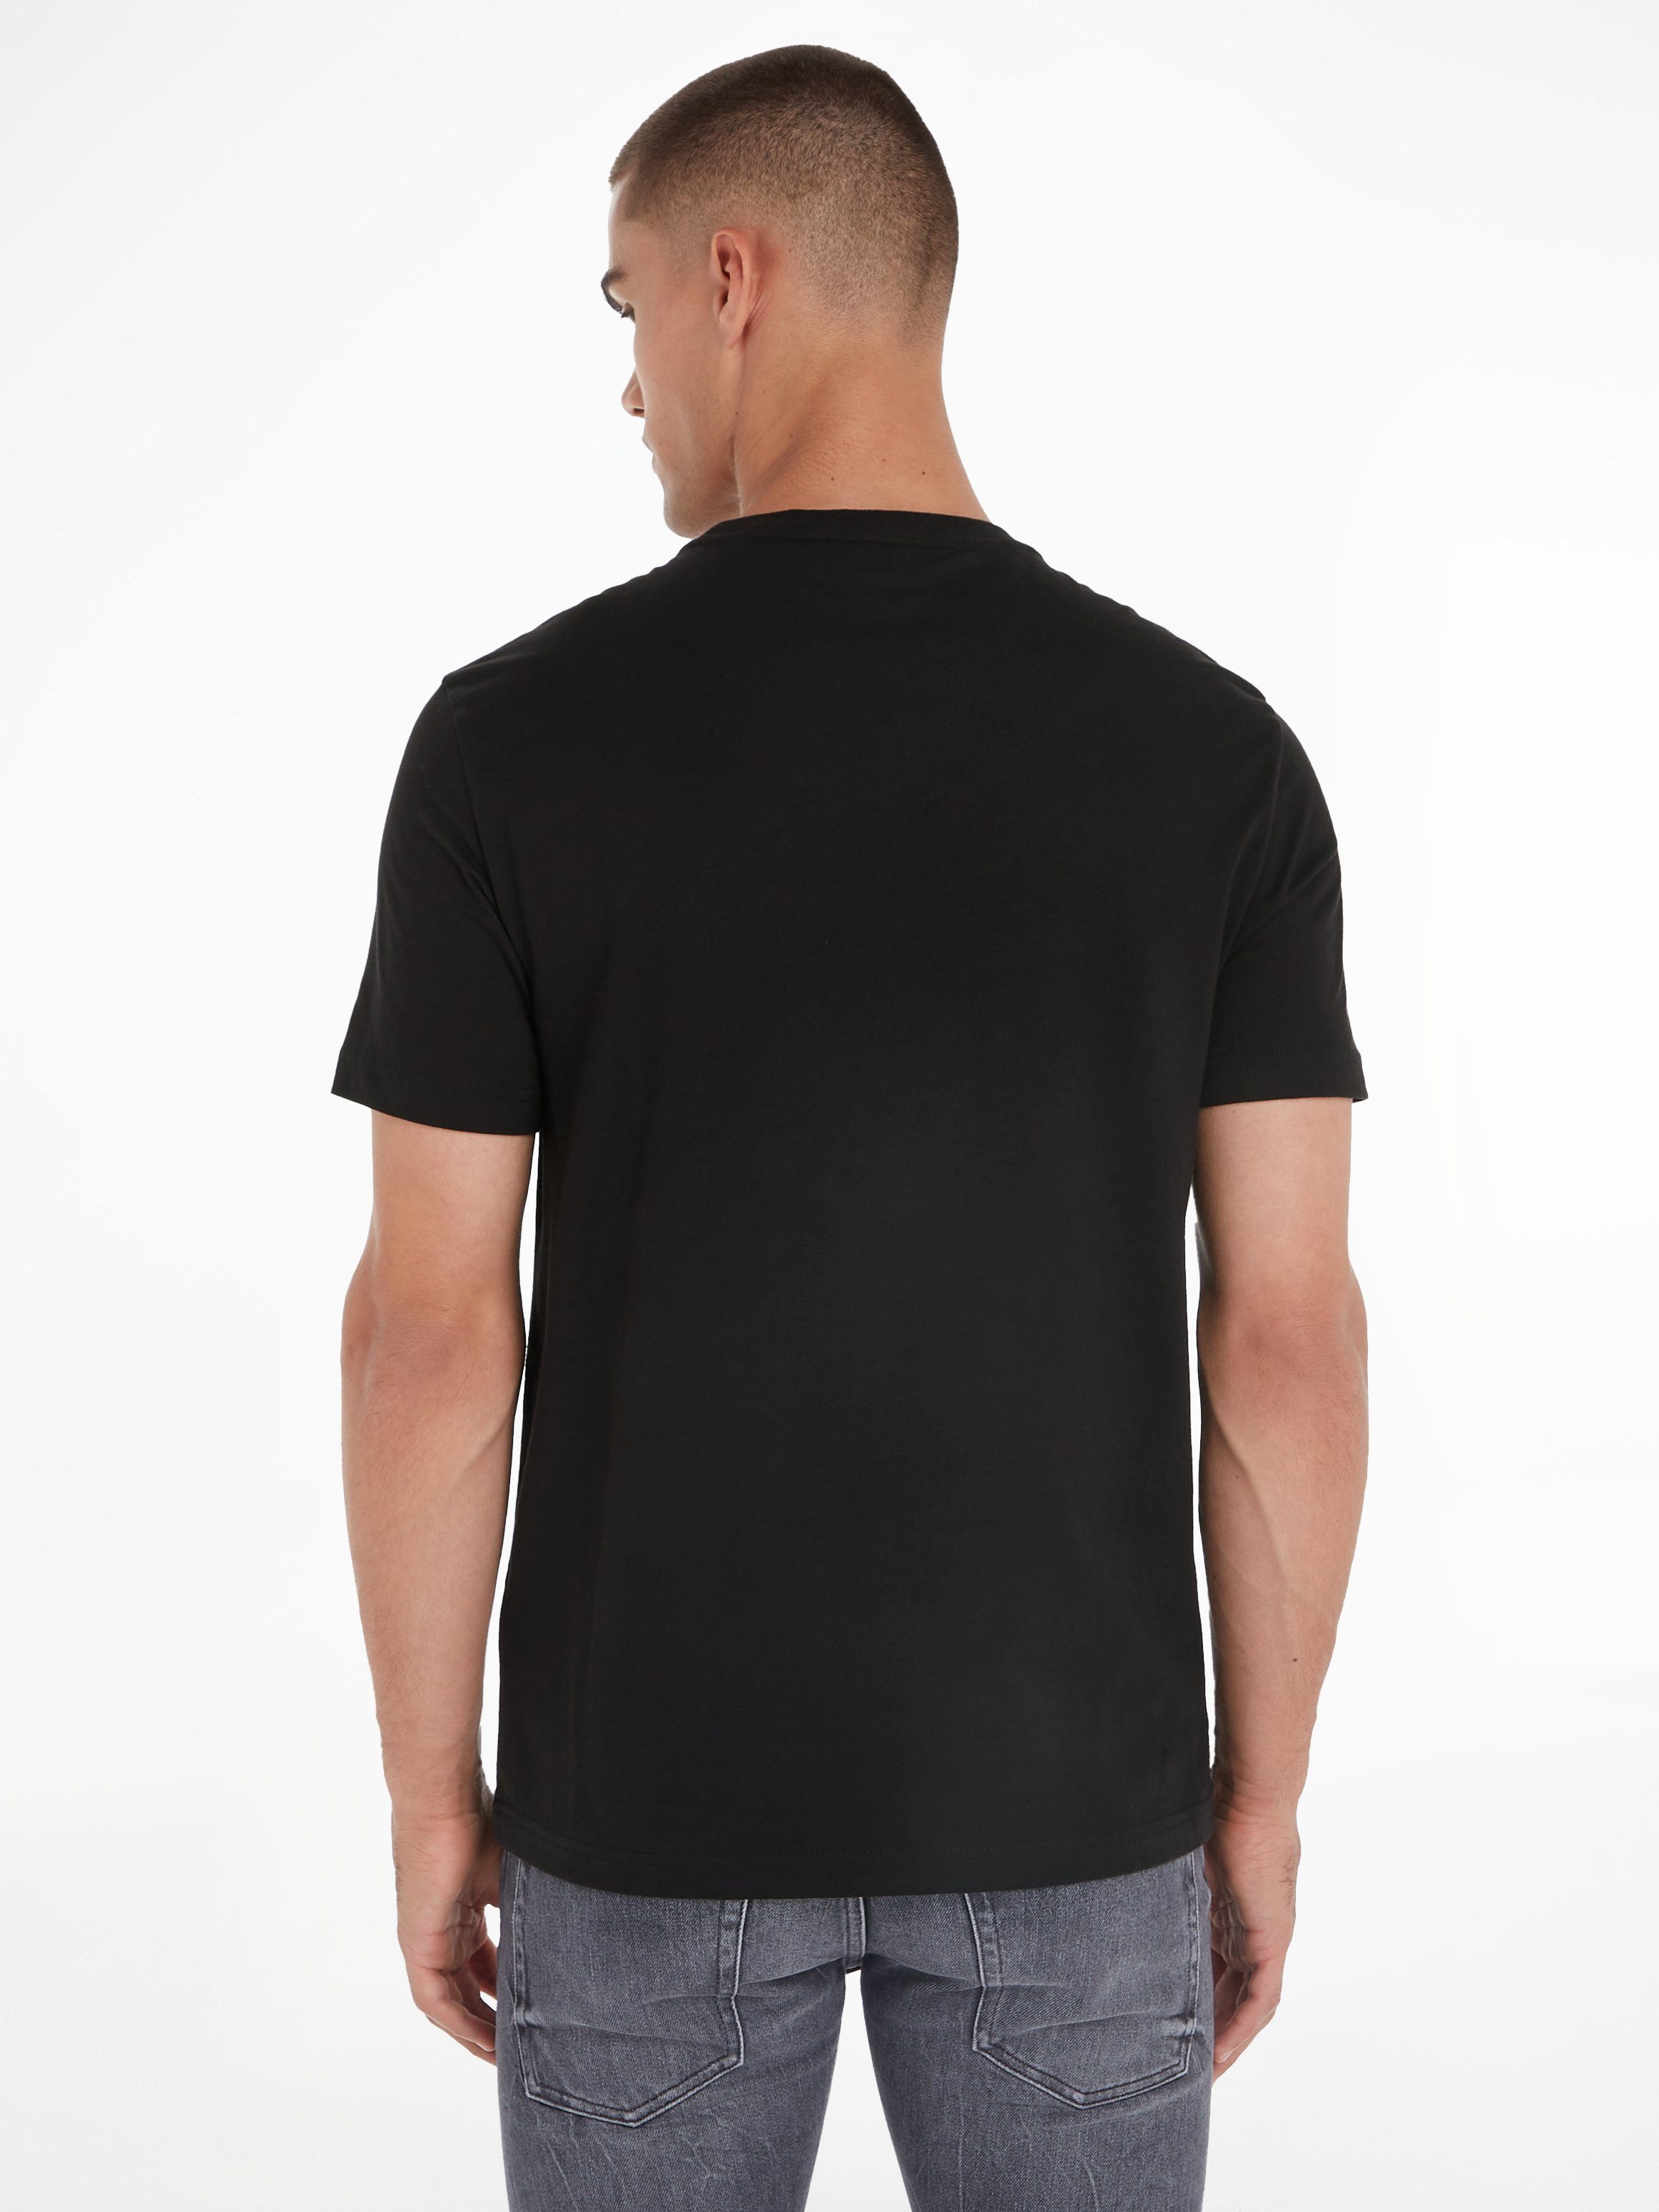 Calvin Klein BOX LOGO T-Shirt Black OVERLAY Ck T-SHIRT